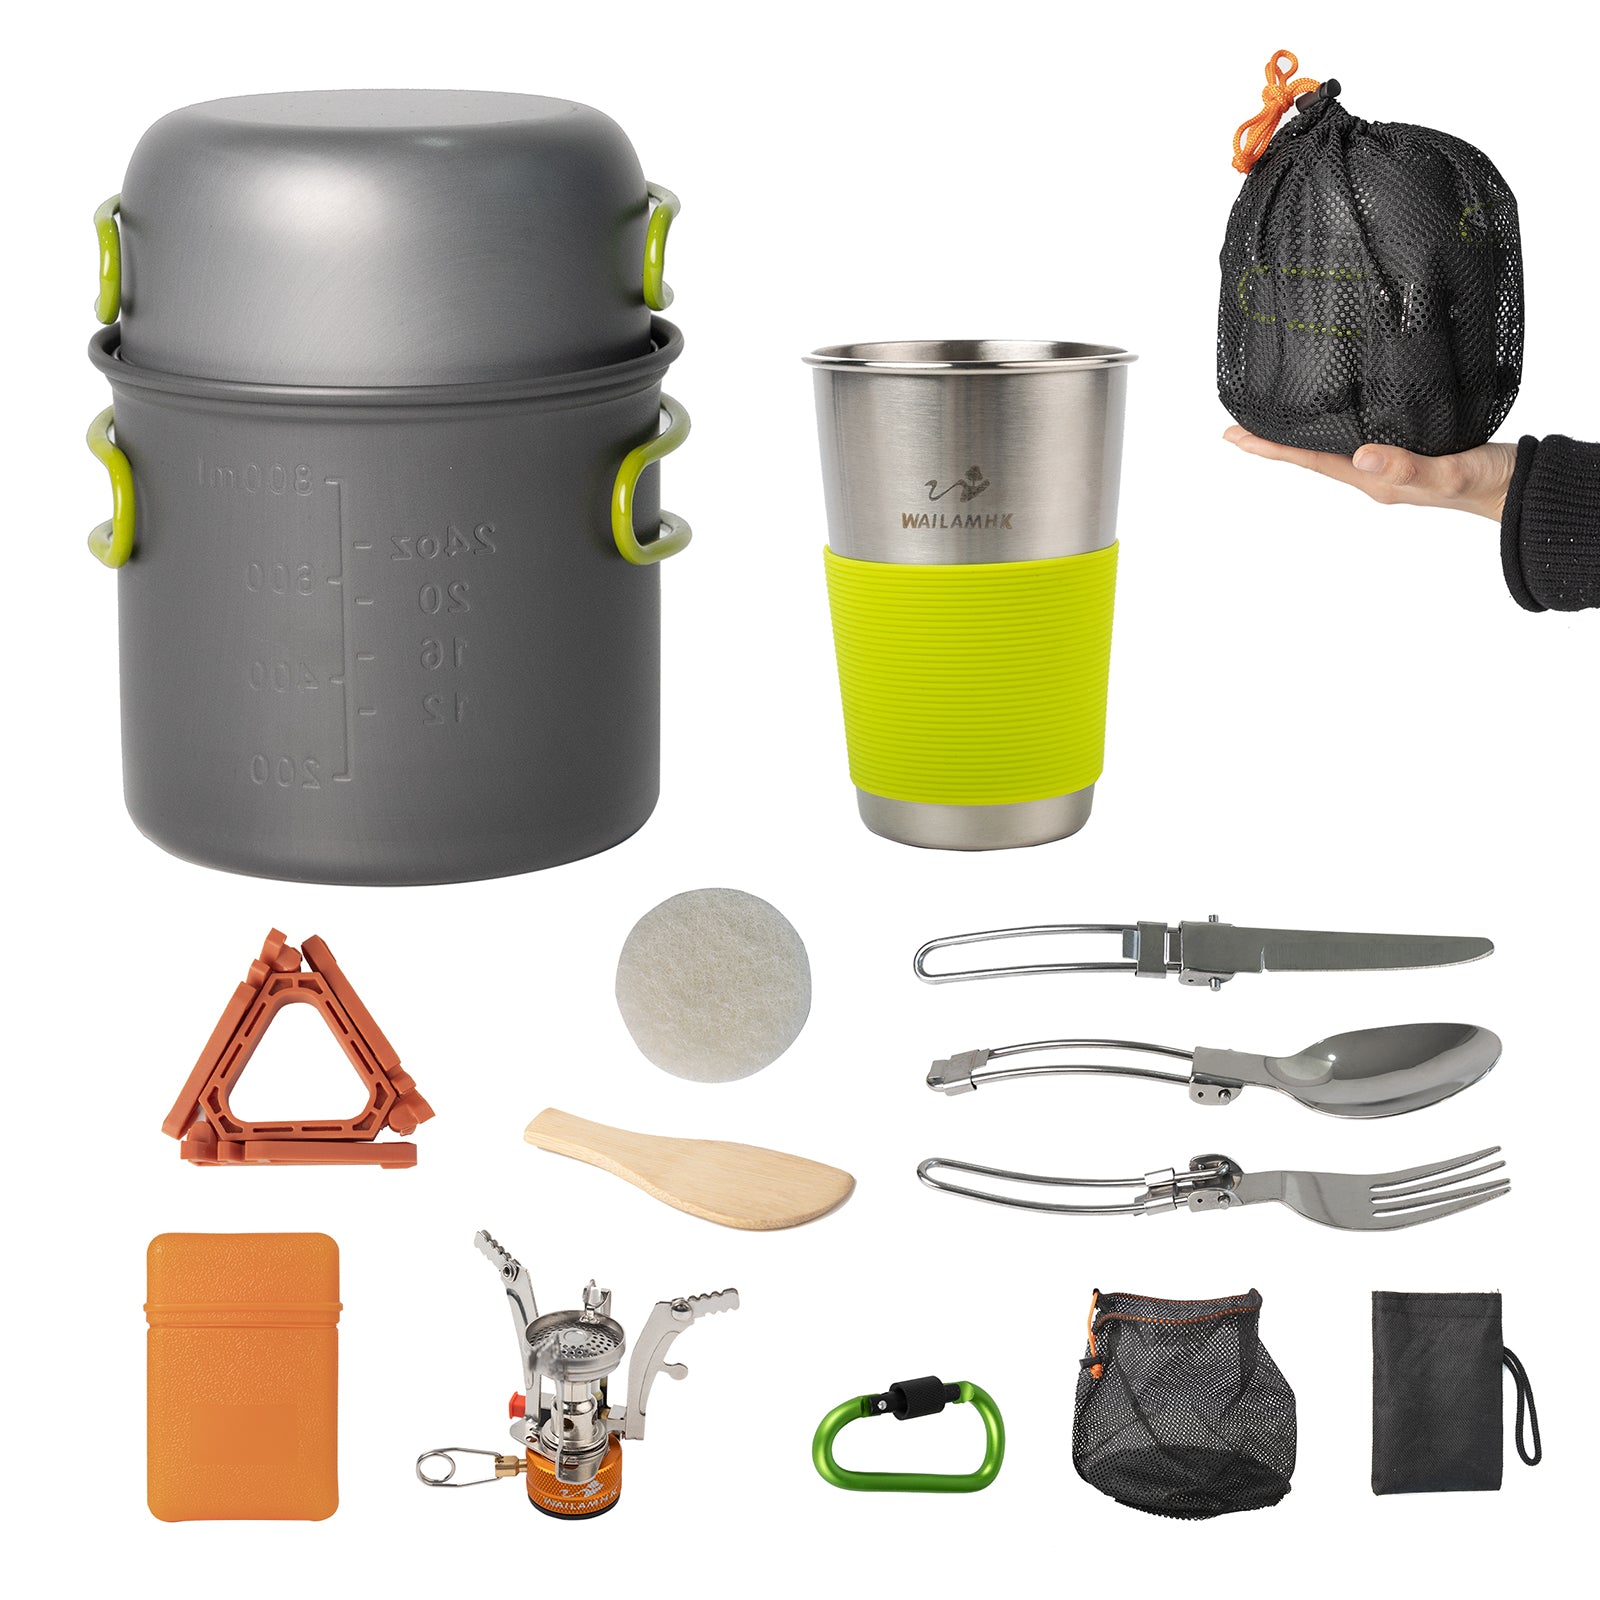 WAILAMHK Camping Cookware Pot Set with Mini Backpacking Stove